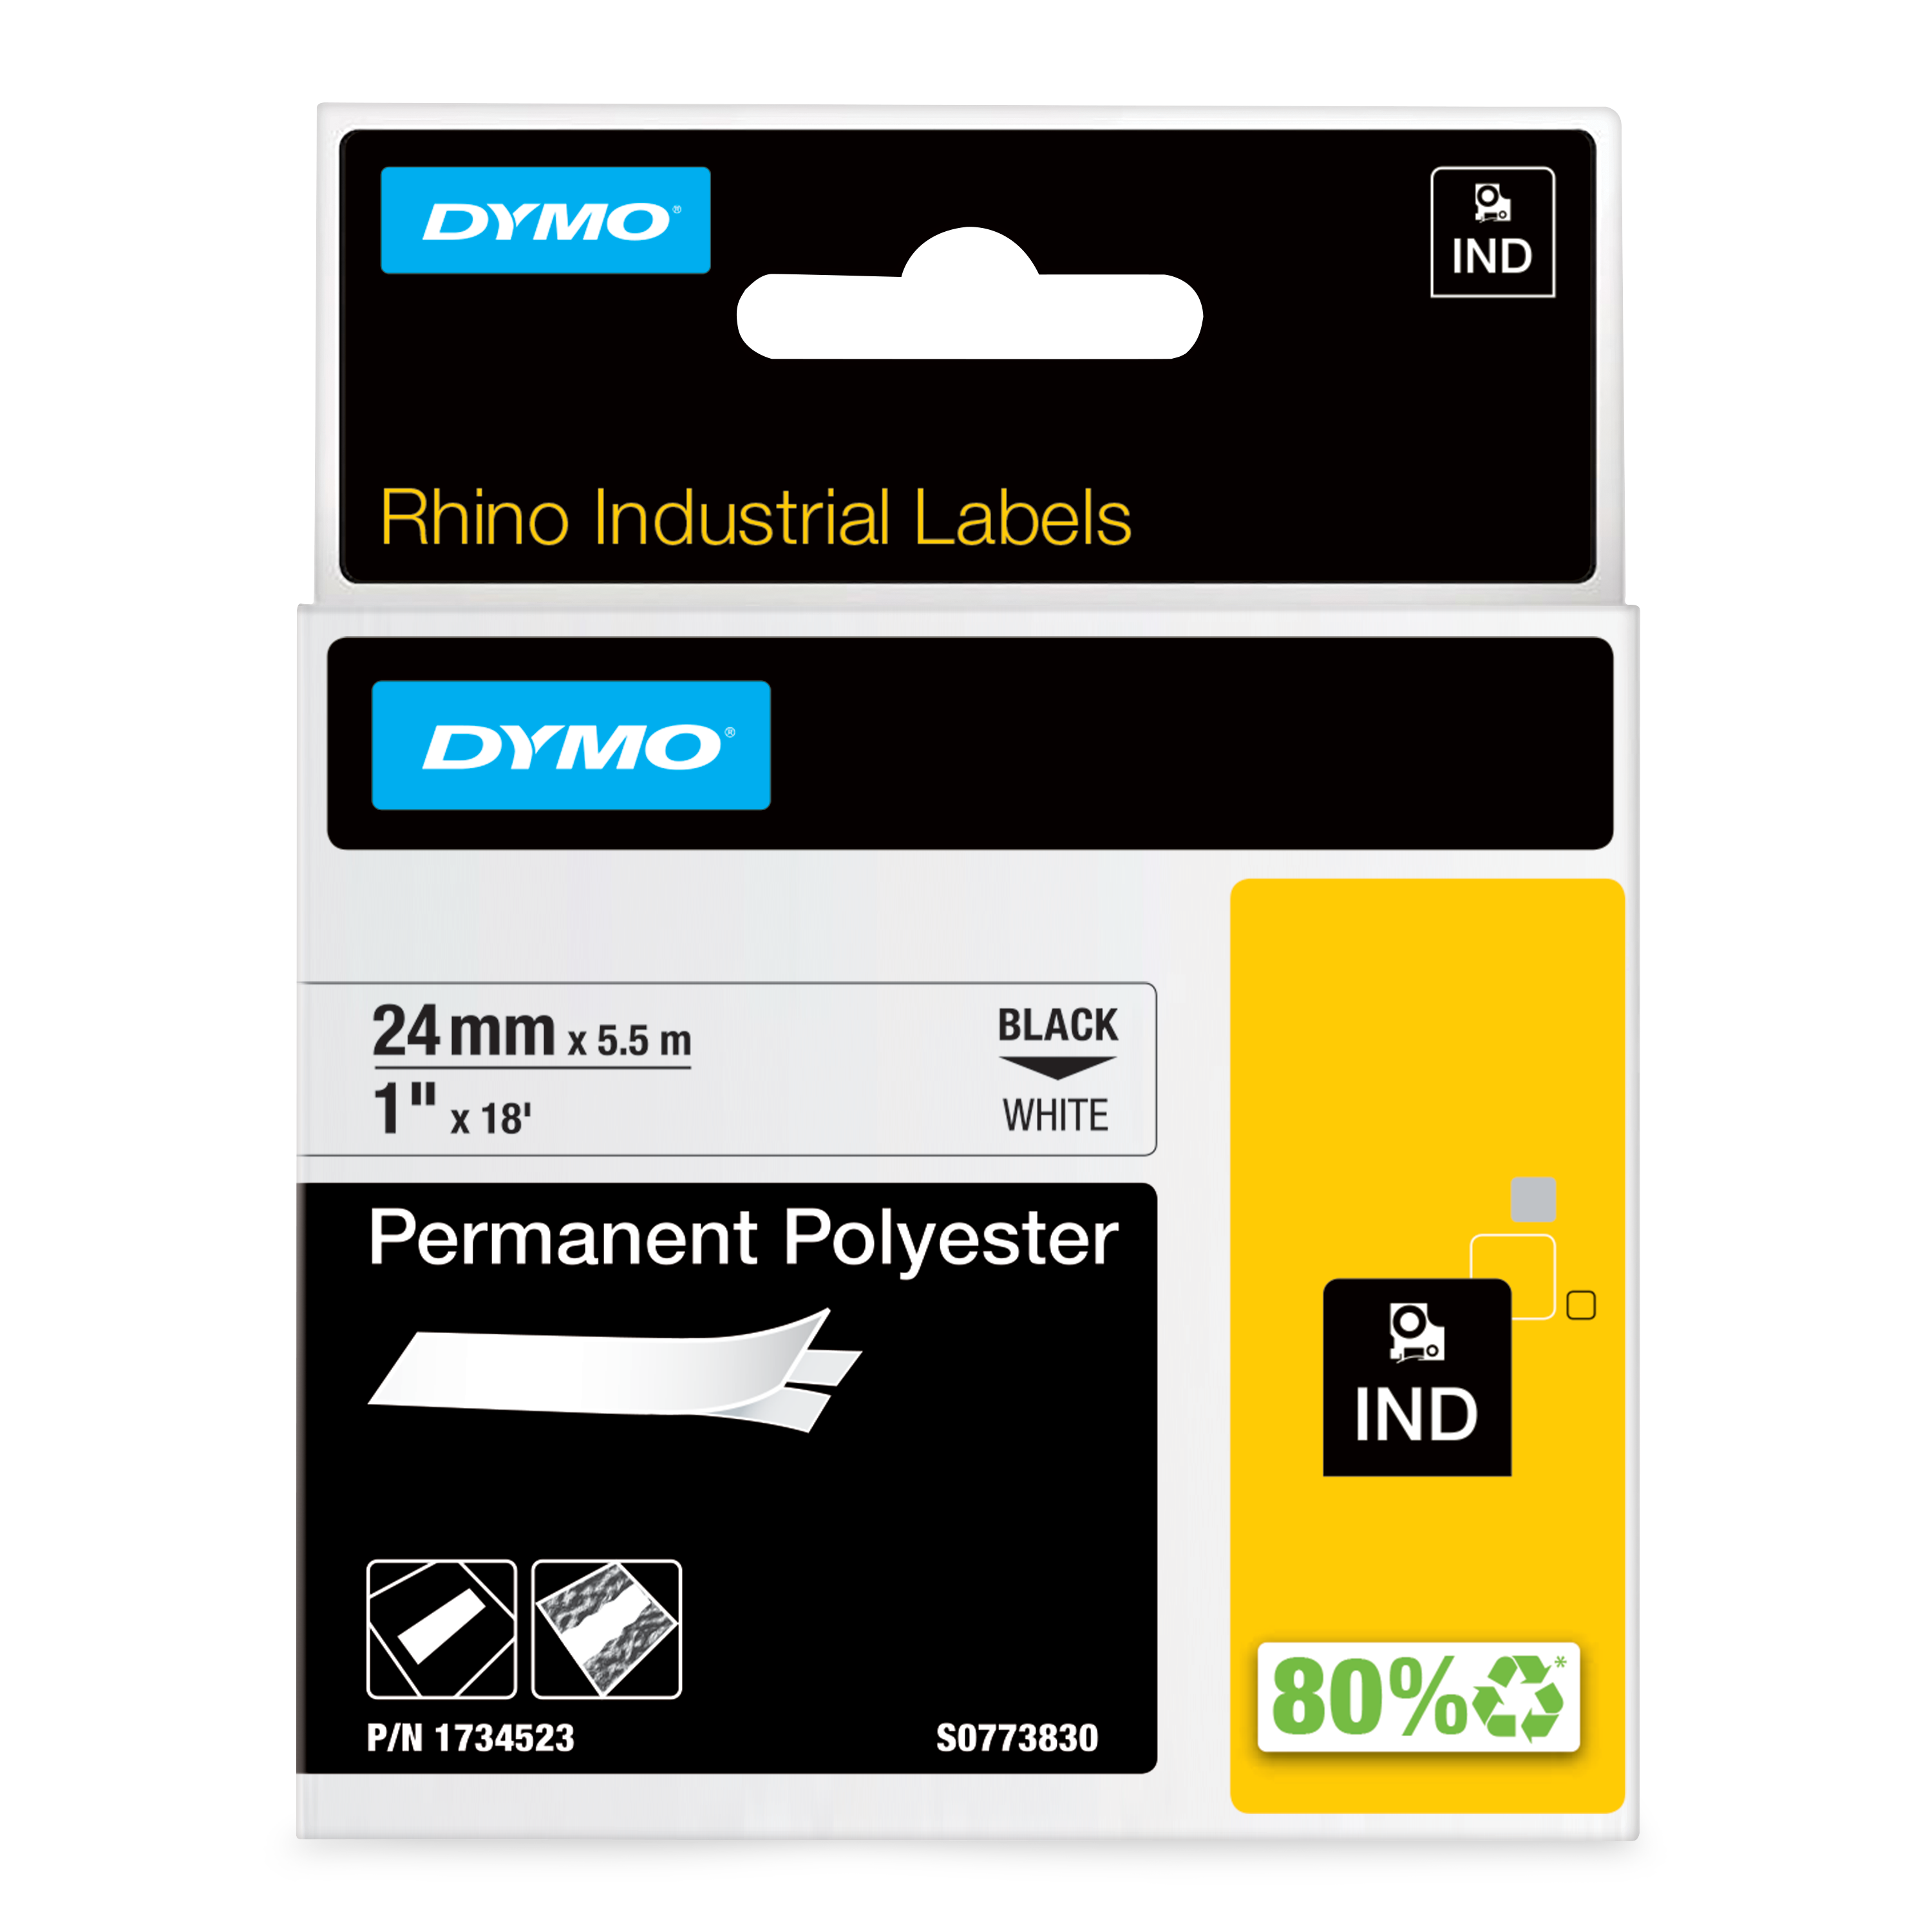 1734523-dymo-label-printer-labels-rs